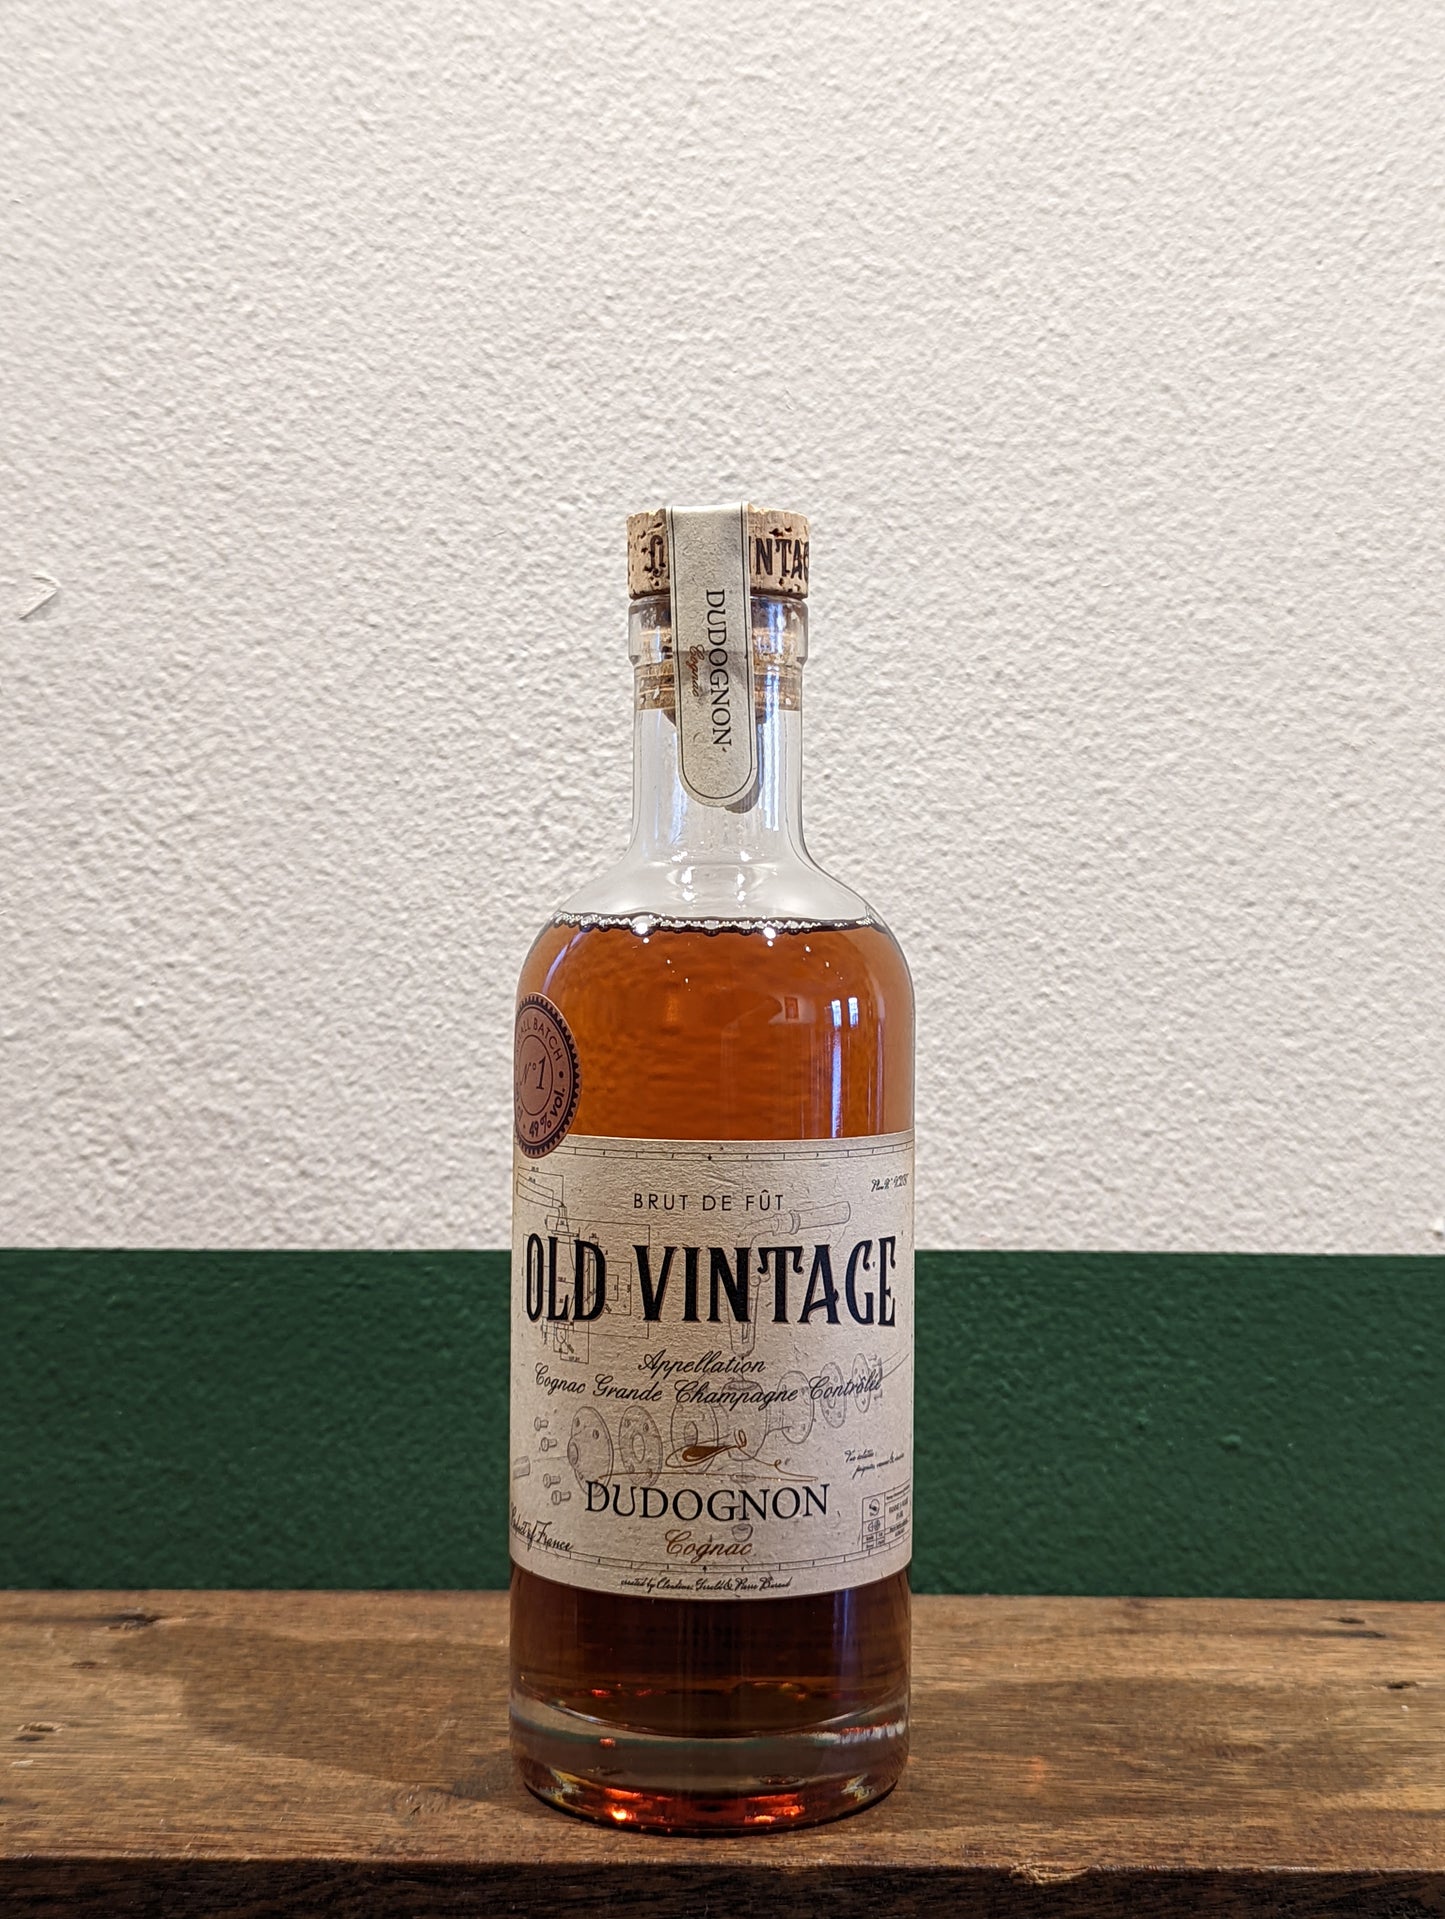 Dudognon - Old Vintage 25 Year Old Single Cask Cognac